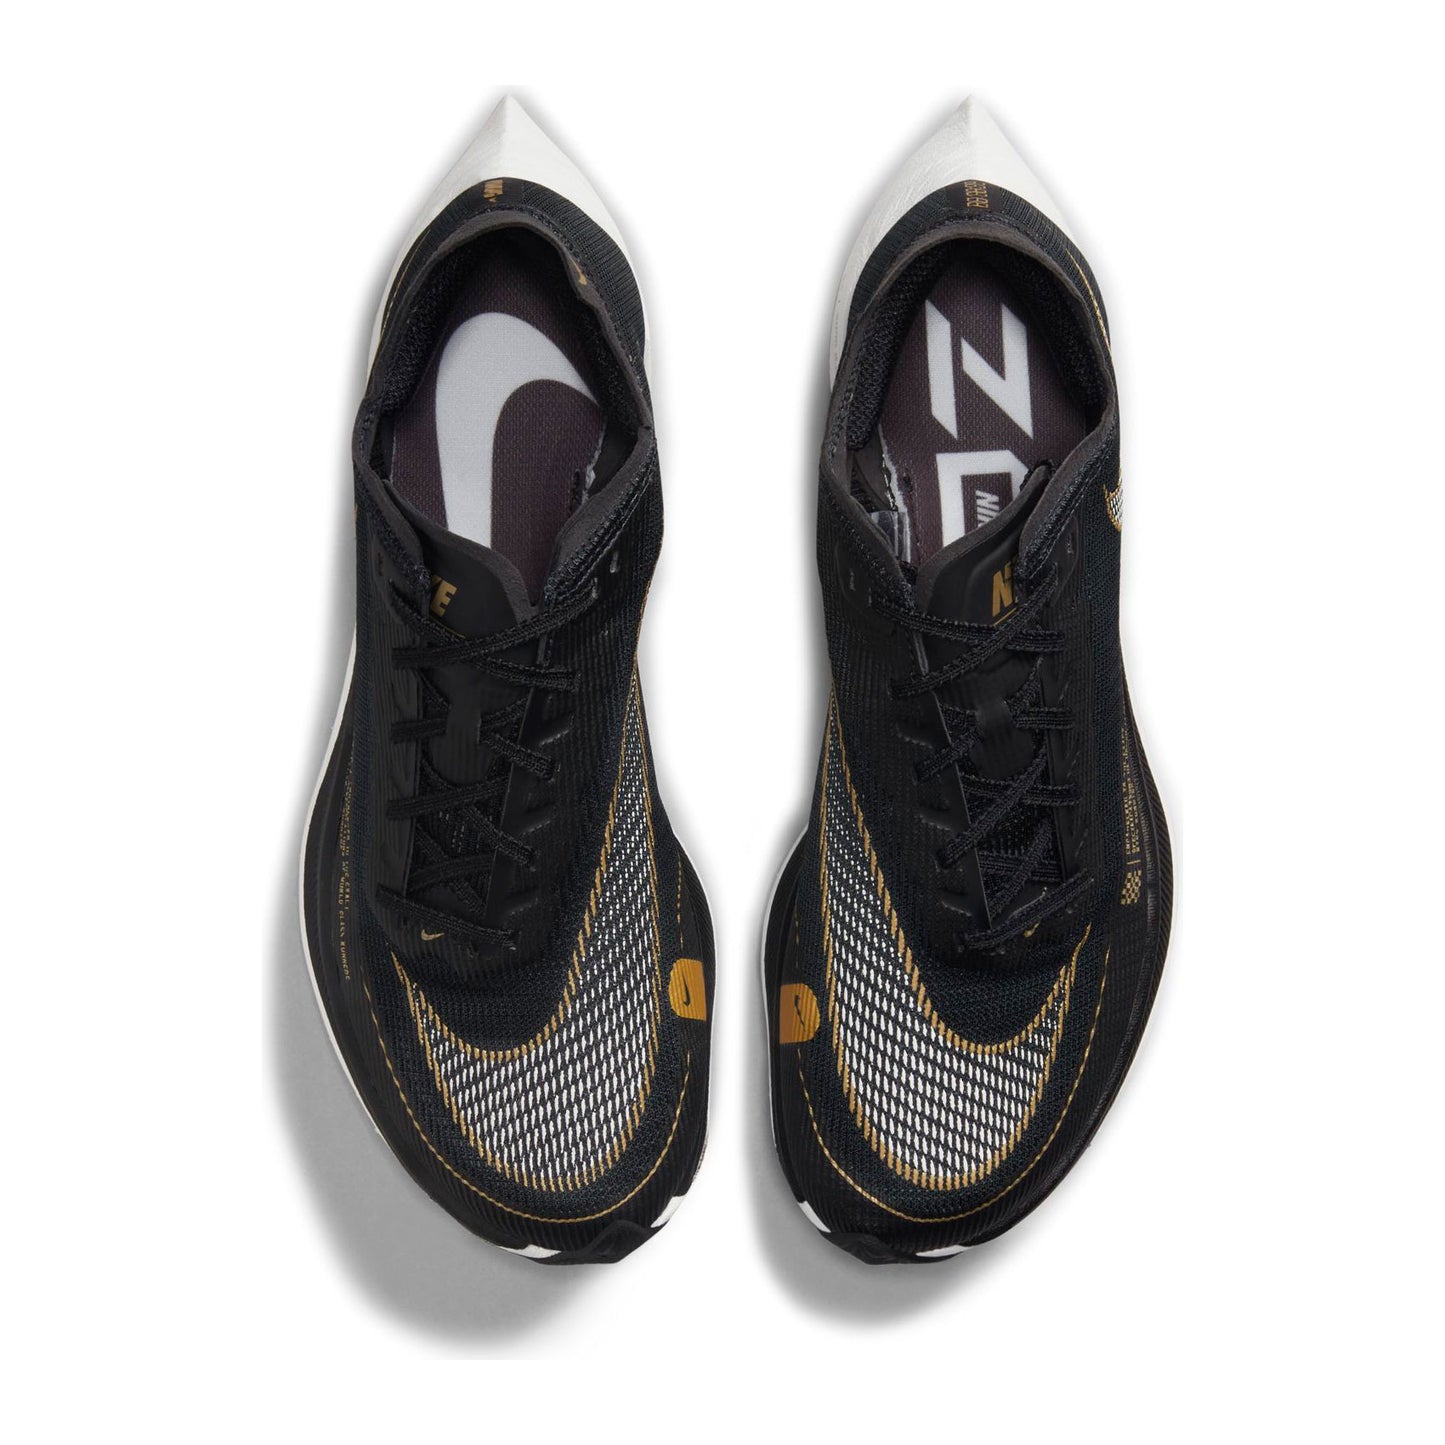 Women's ZoomX Vaporfly Next % 2 Racing Shoe - Black/White/Metallic Gold Coin - Regular (B)